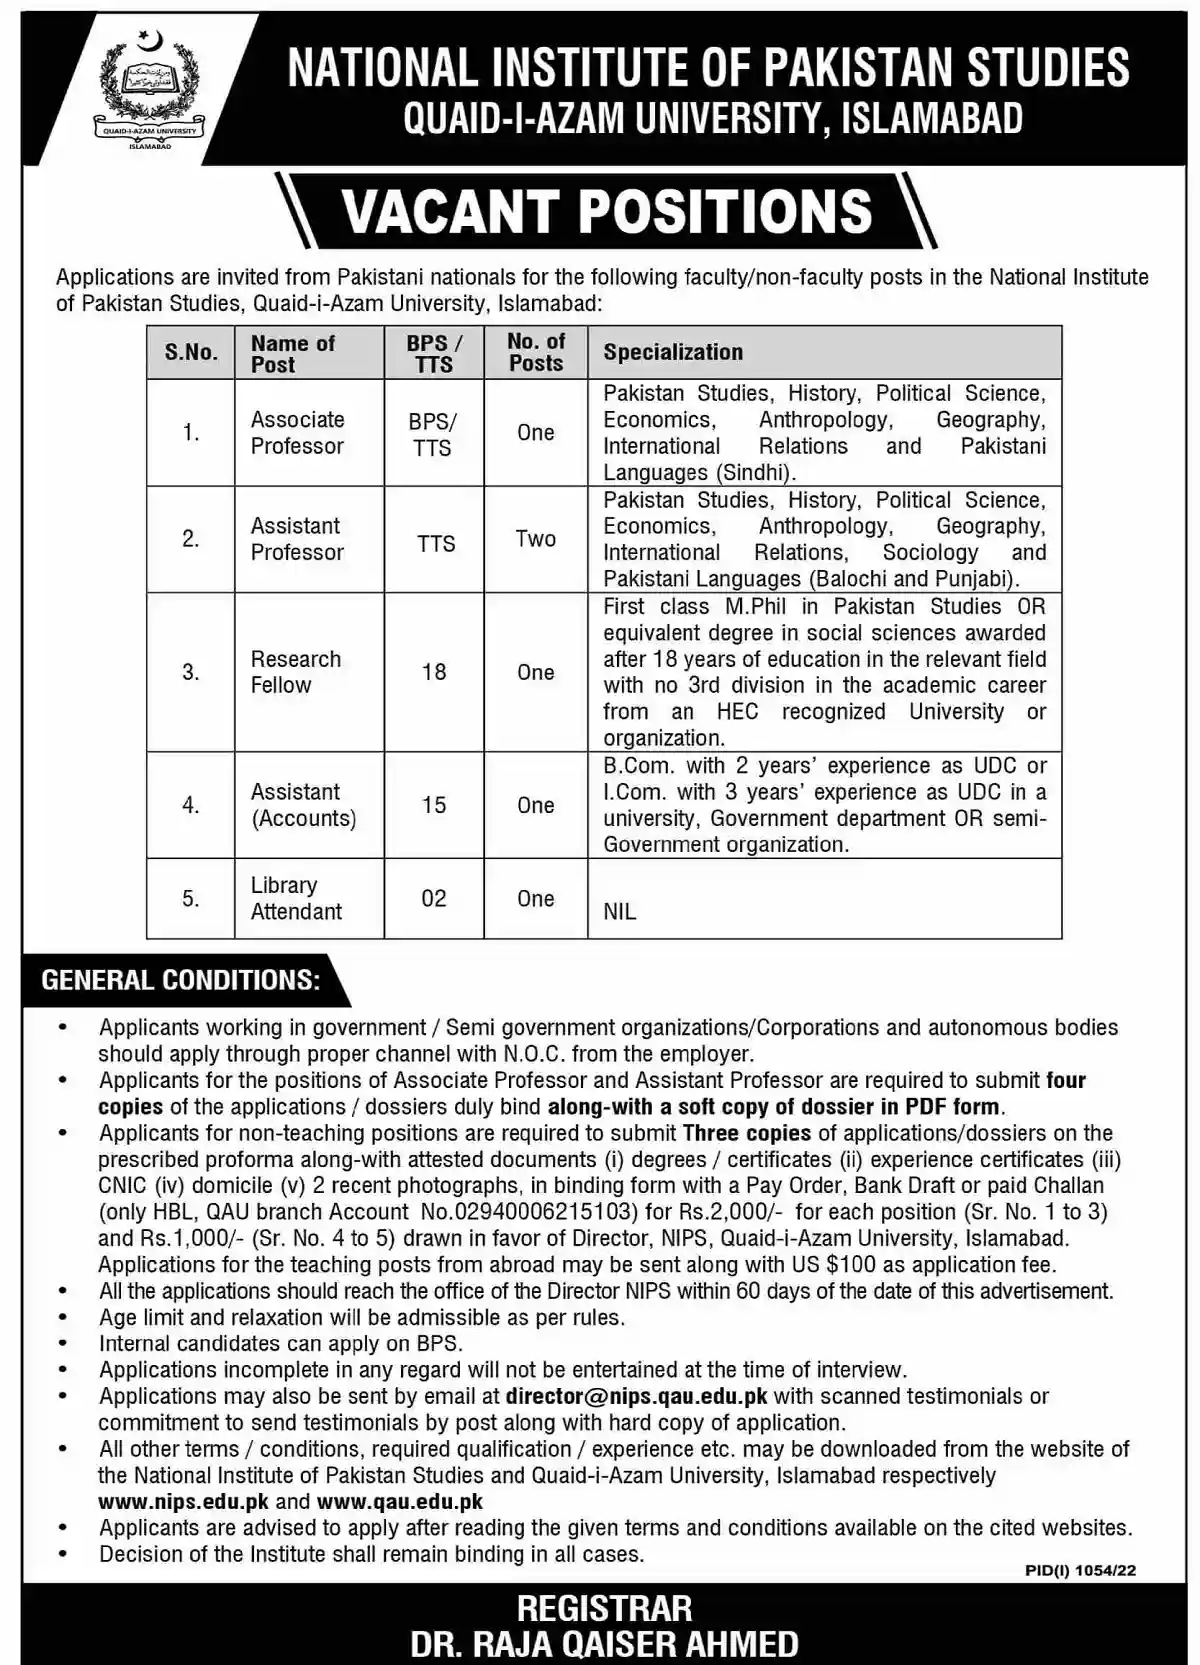 Quaid-i-Azam University Jobs 2022 National Institute of Pakistan Studies NIPS